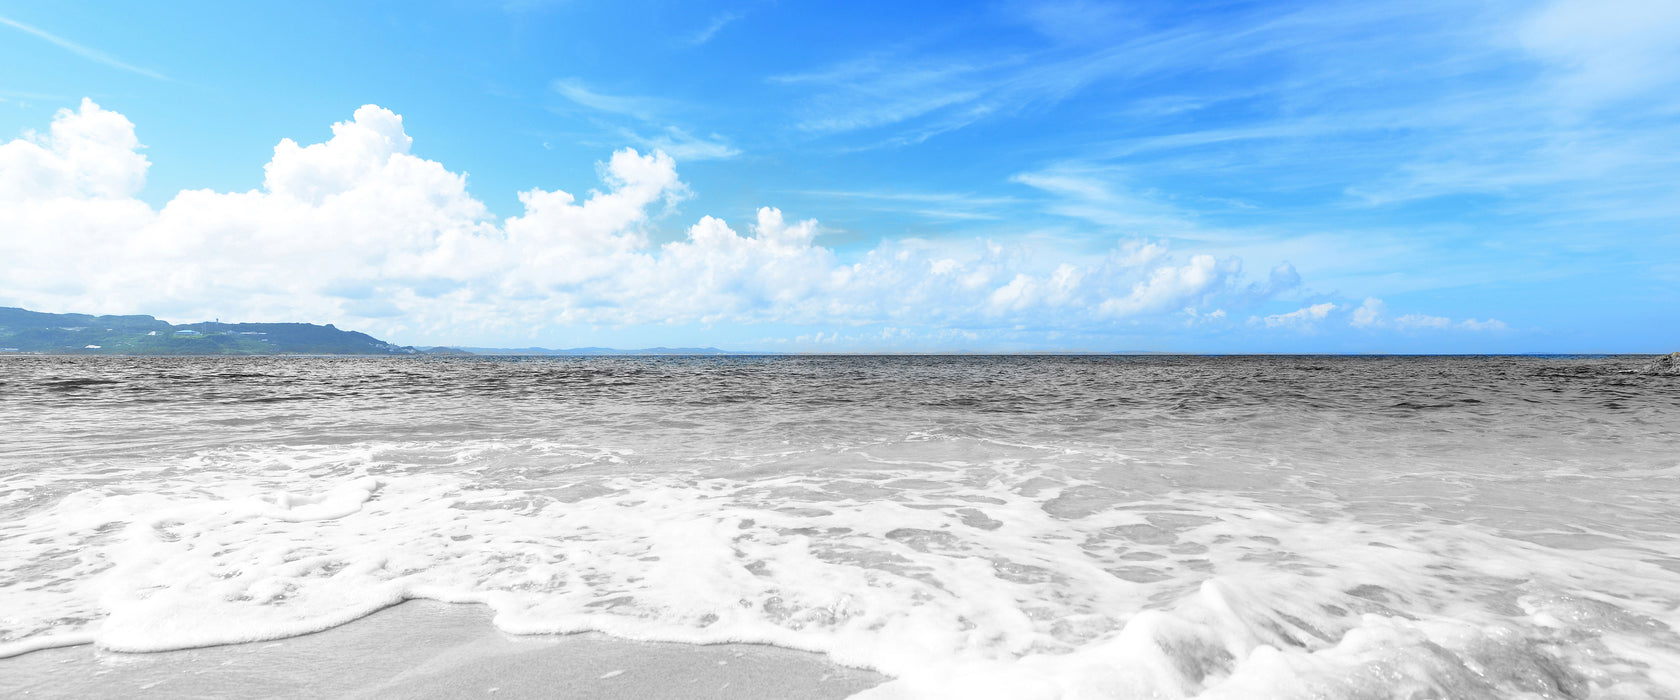 Sandstrand mit Welle, Glasbild Panorama